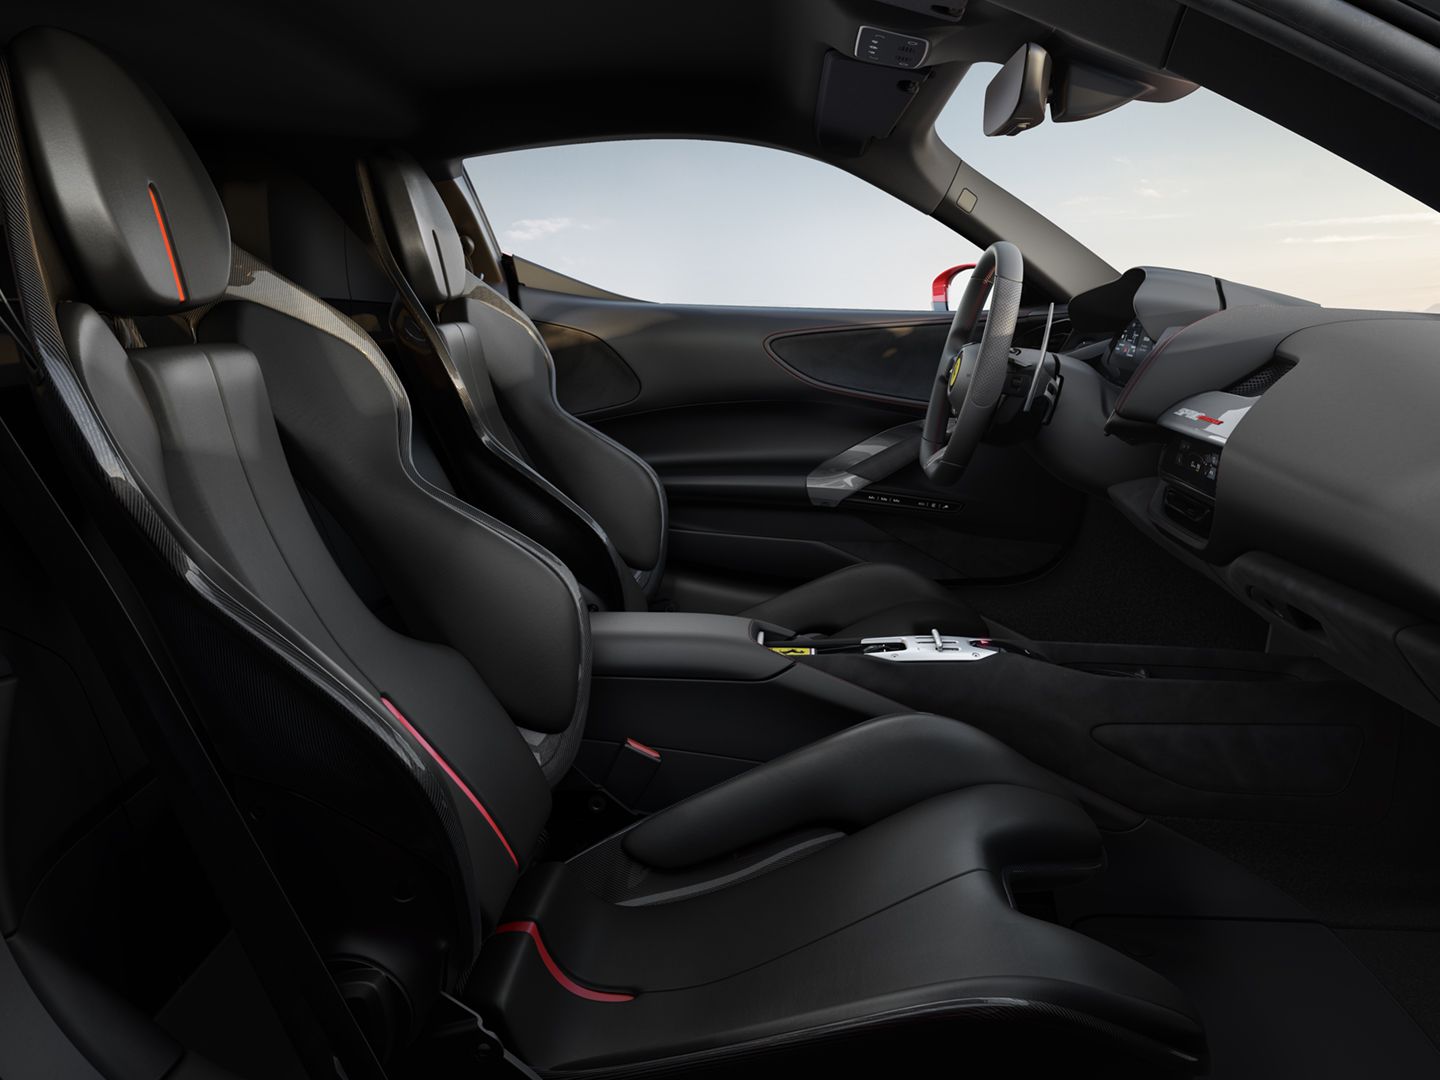 2021 Ferrari SF90 Stradale interior with black leather bucket seats